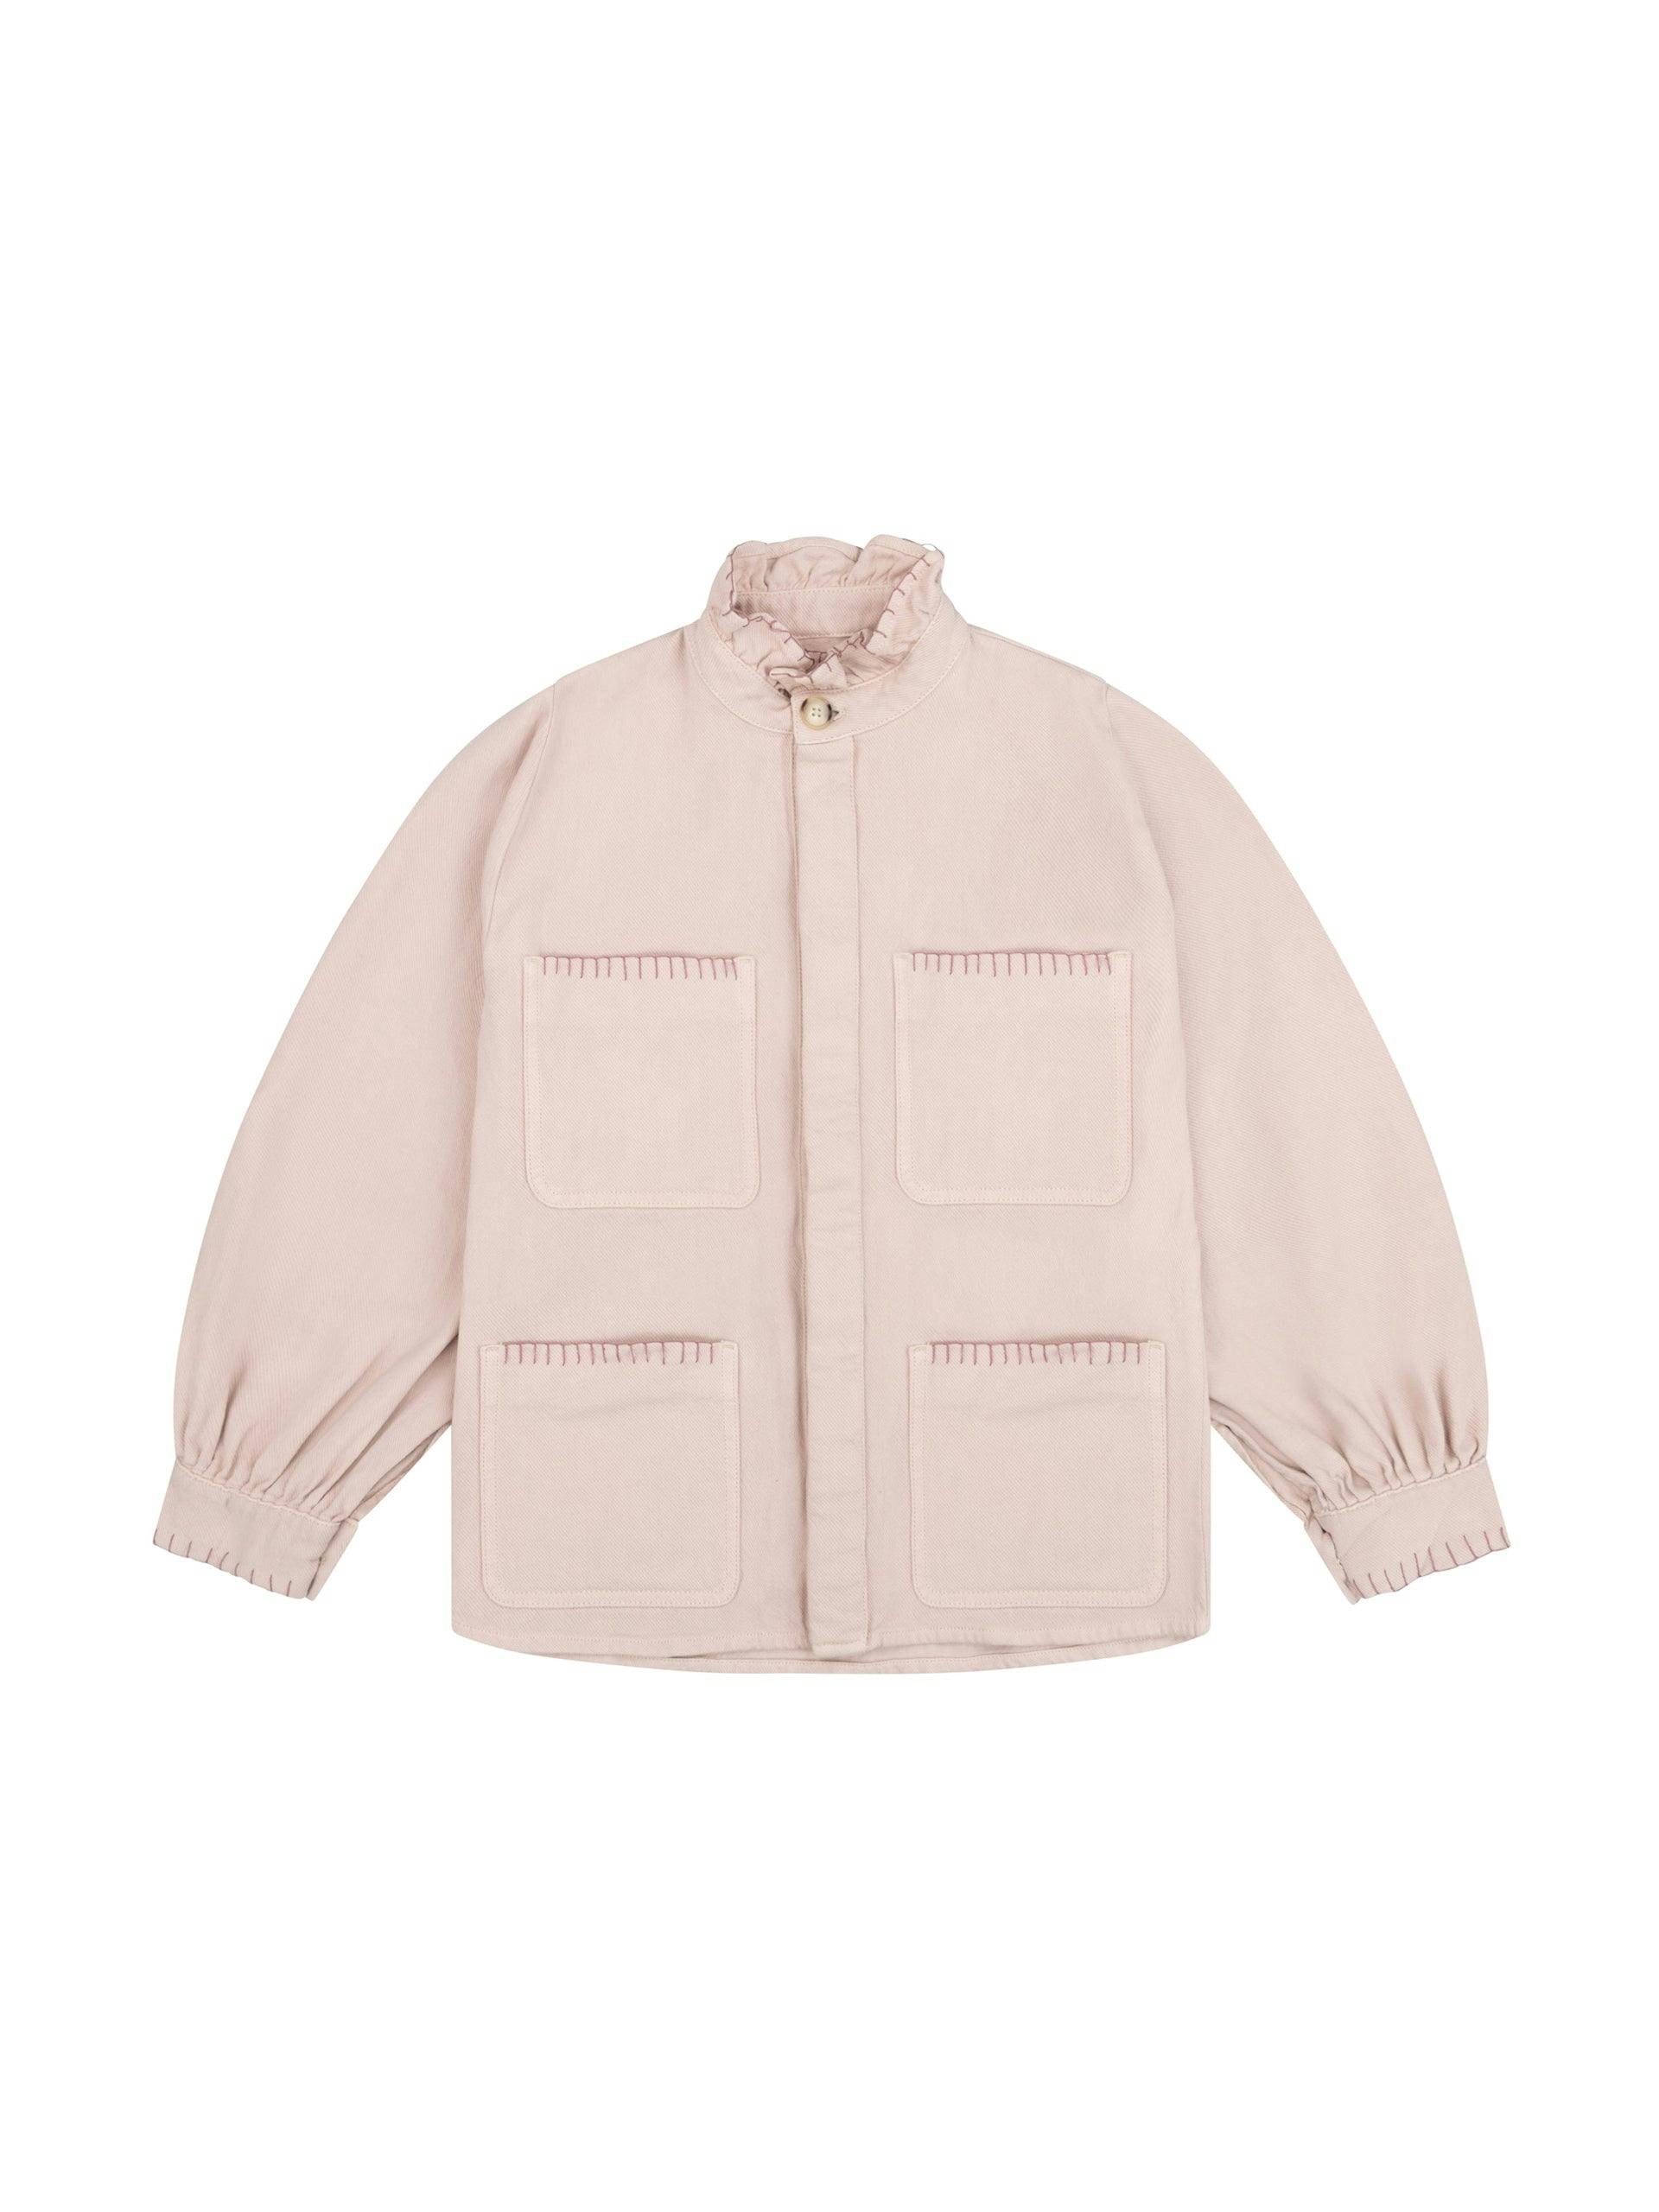 Barely pink Pablo jacket